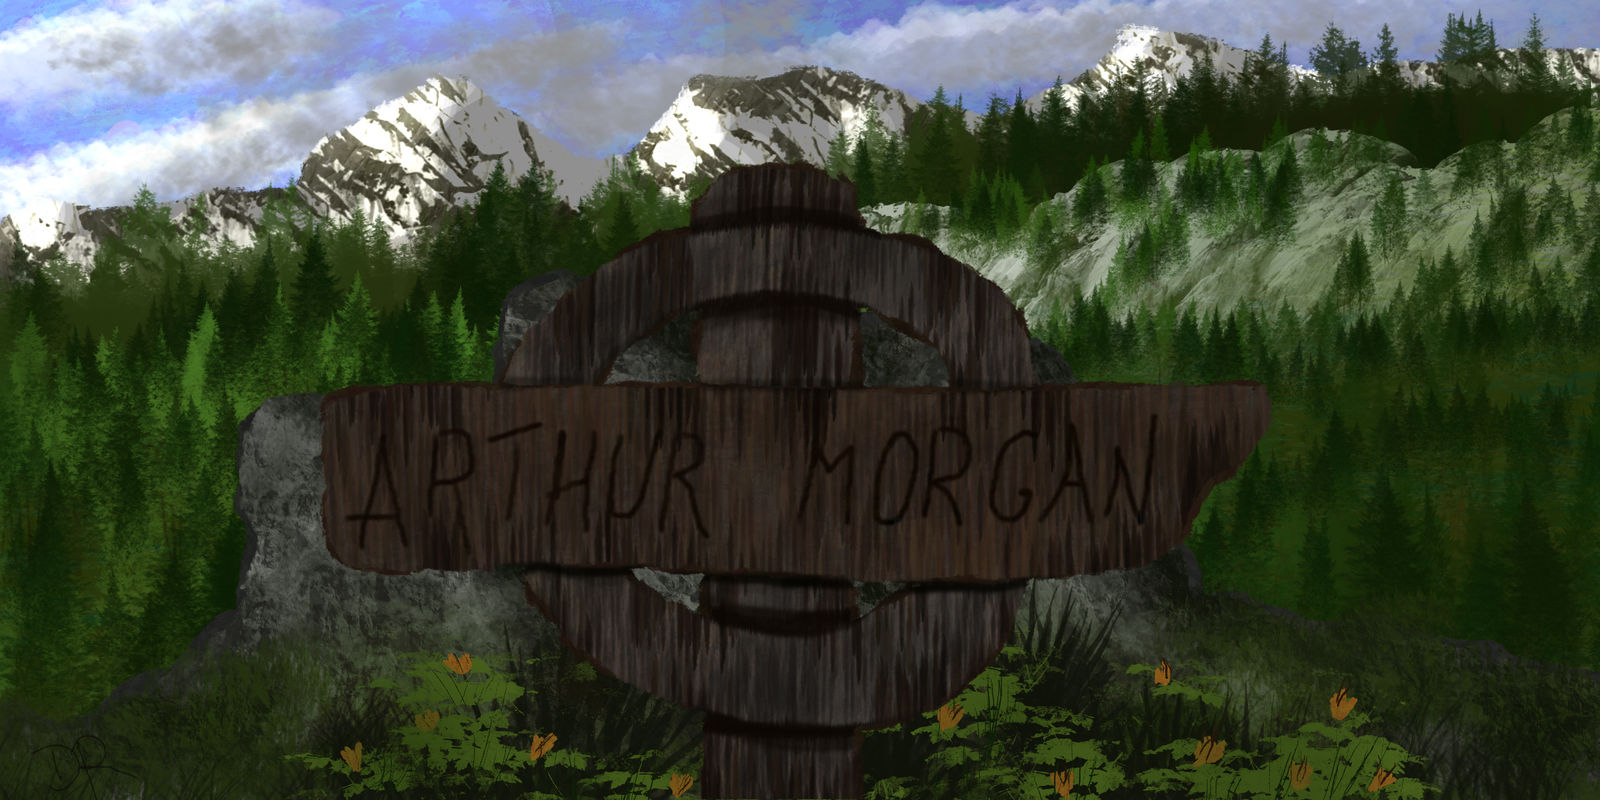 The Death of Arthur Morgan by CalebBaconator on DeviantArt